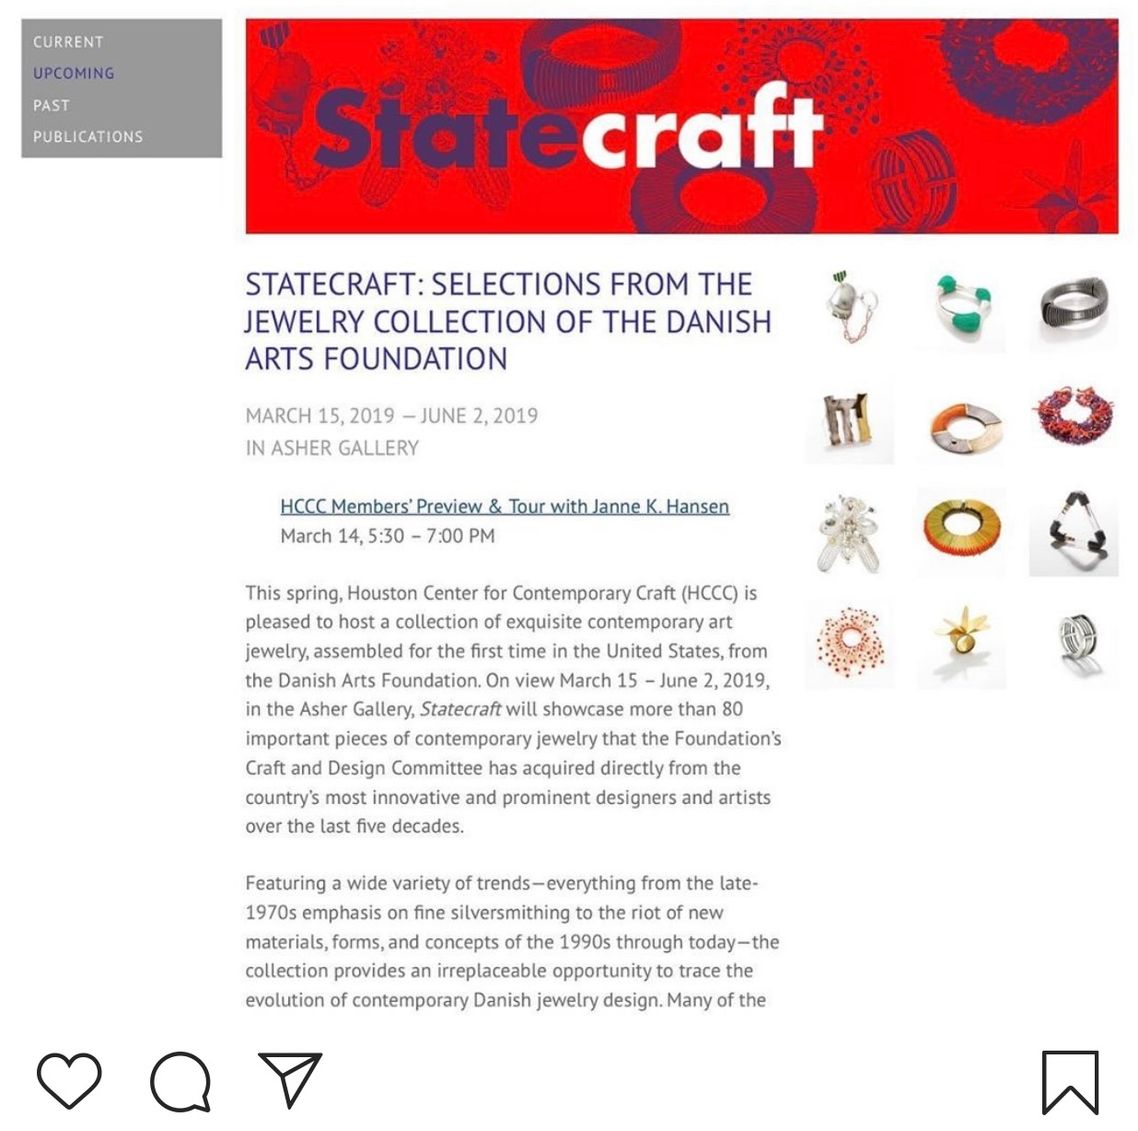 Annette Dam - Houston Center for Contemporary Craft, 2019